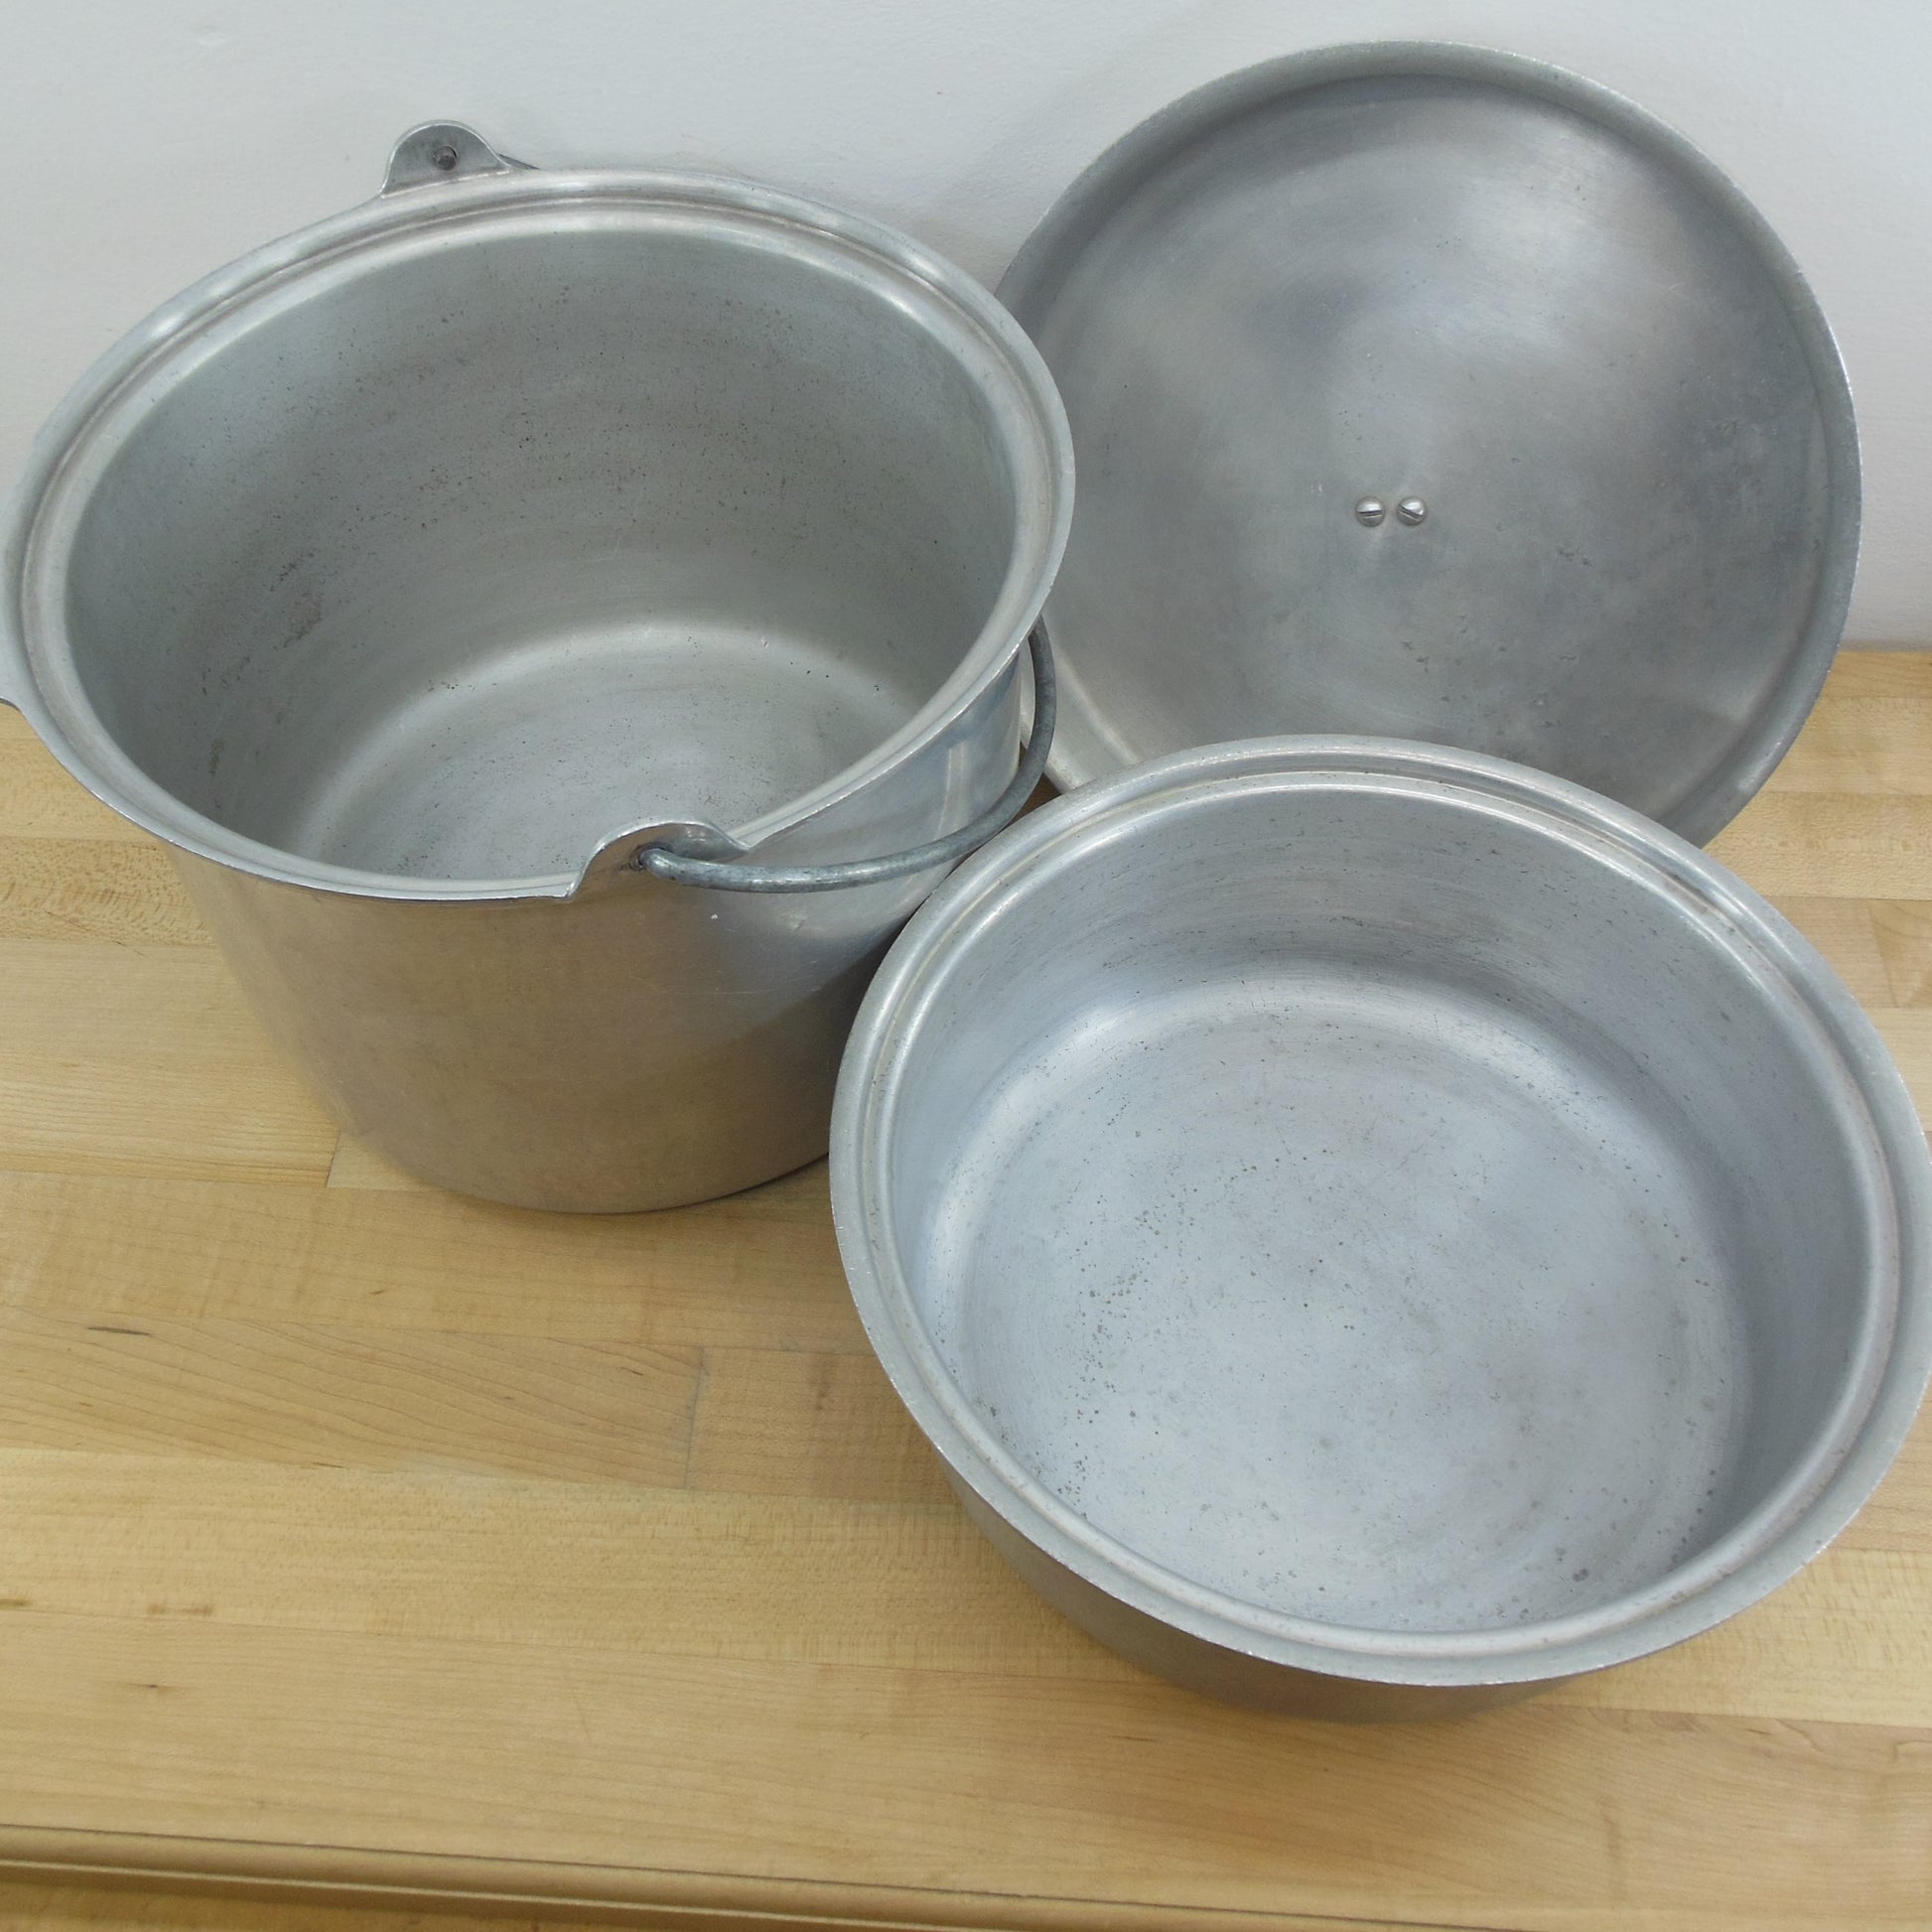 JSP Pressure Pot, 8 quart. Made of high quality aluminum. Dental curing pot